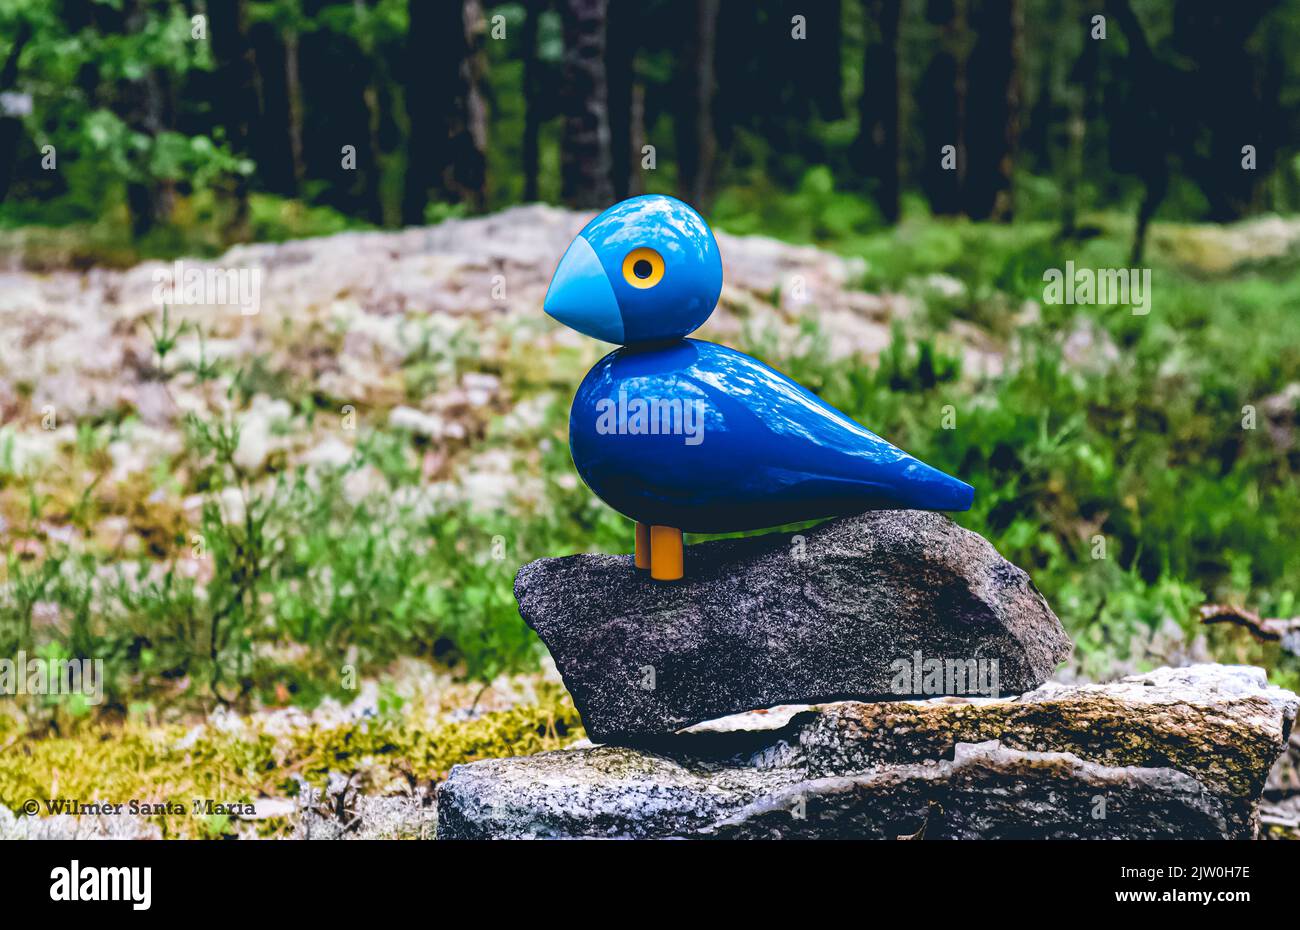 Panoramic view of a decorative wooden figure blue Kay Bojesen songbird (Sångfågel) sitting on a rock in the Vilsta forest, Eskilstuna, Sweden. Stock Photo